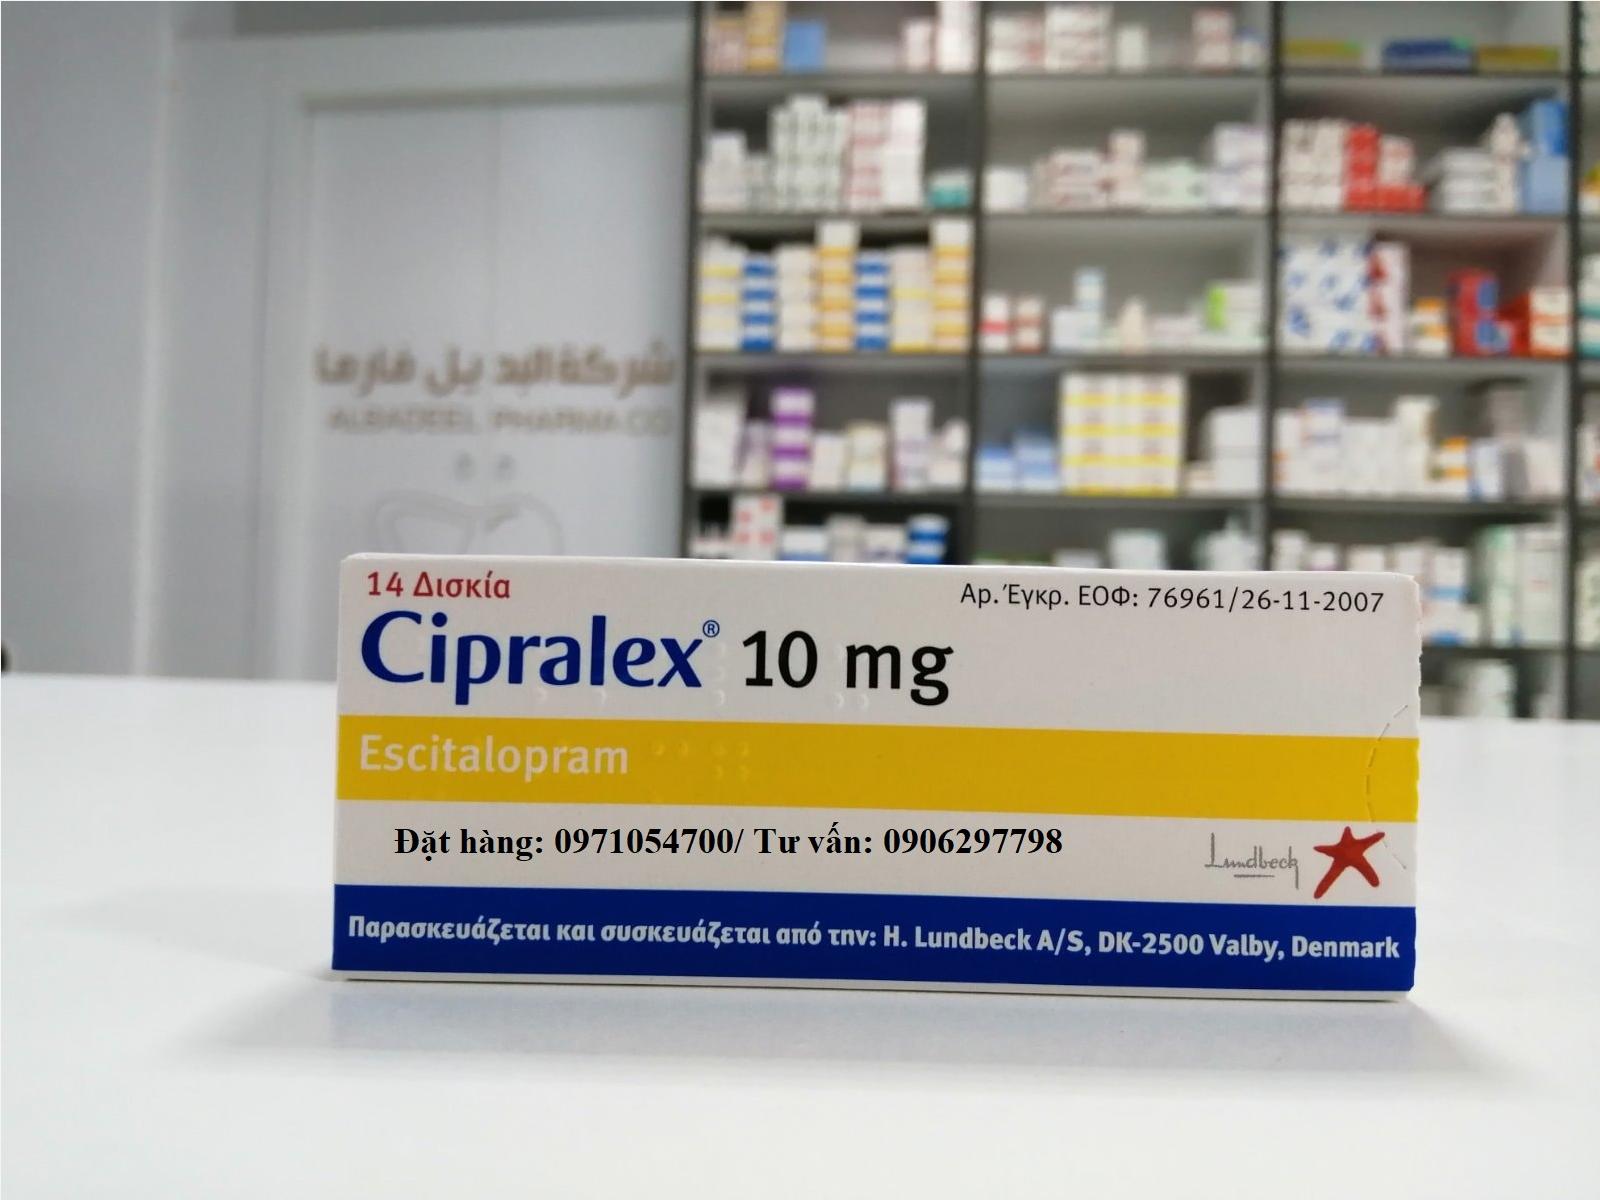 Thuốc Cipralex Escitalopram giá bao nhiêu mua ở đâu?